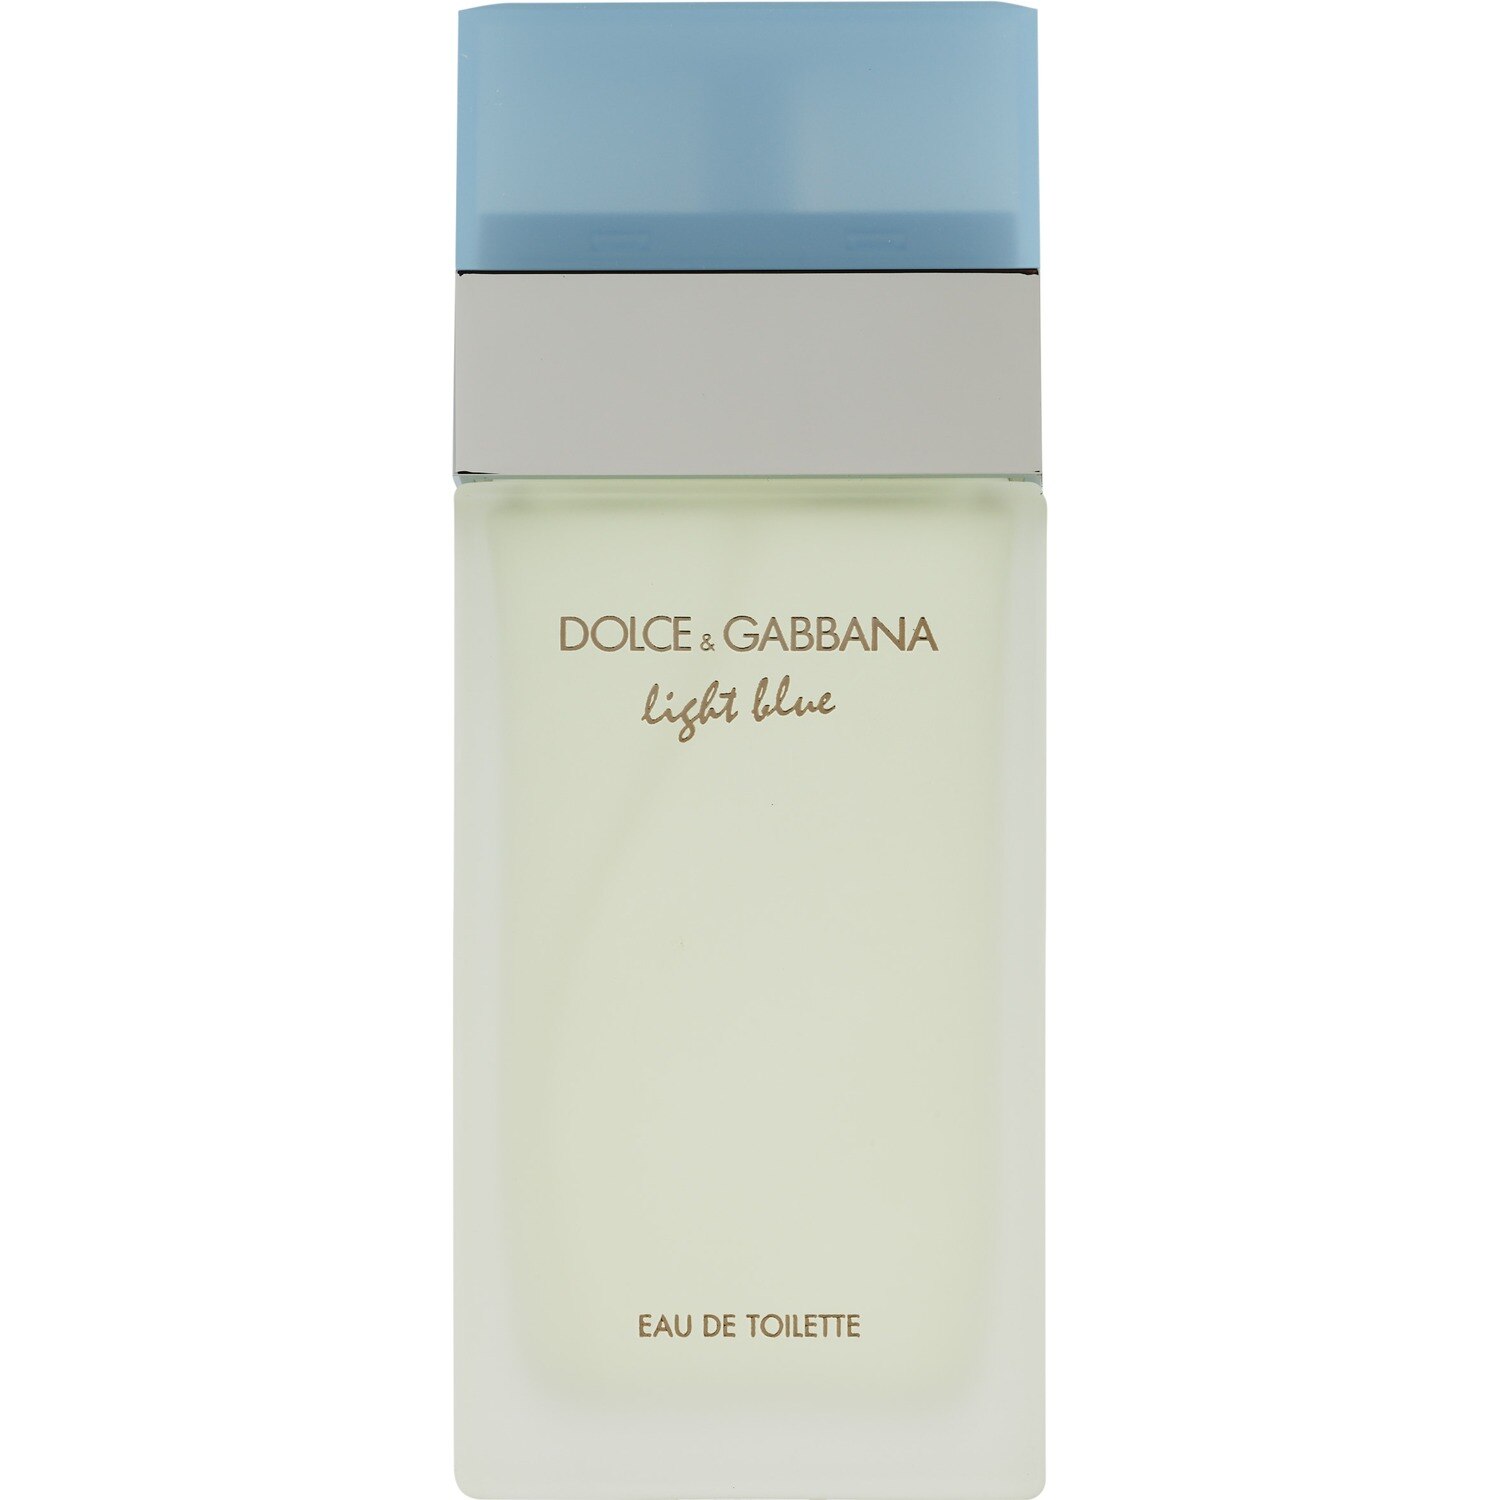 Dolce & Gabbana - Light Blue Eau de Toilette, spray natural